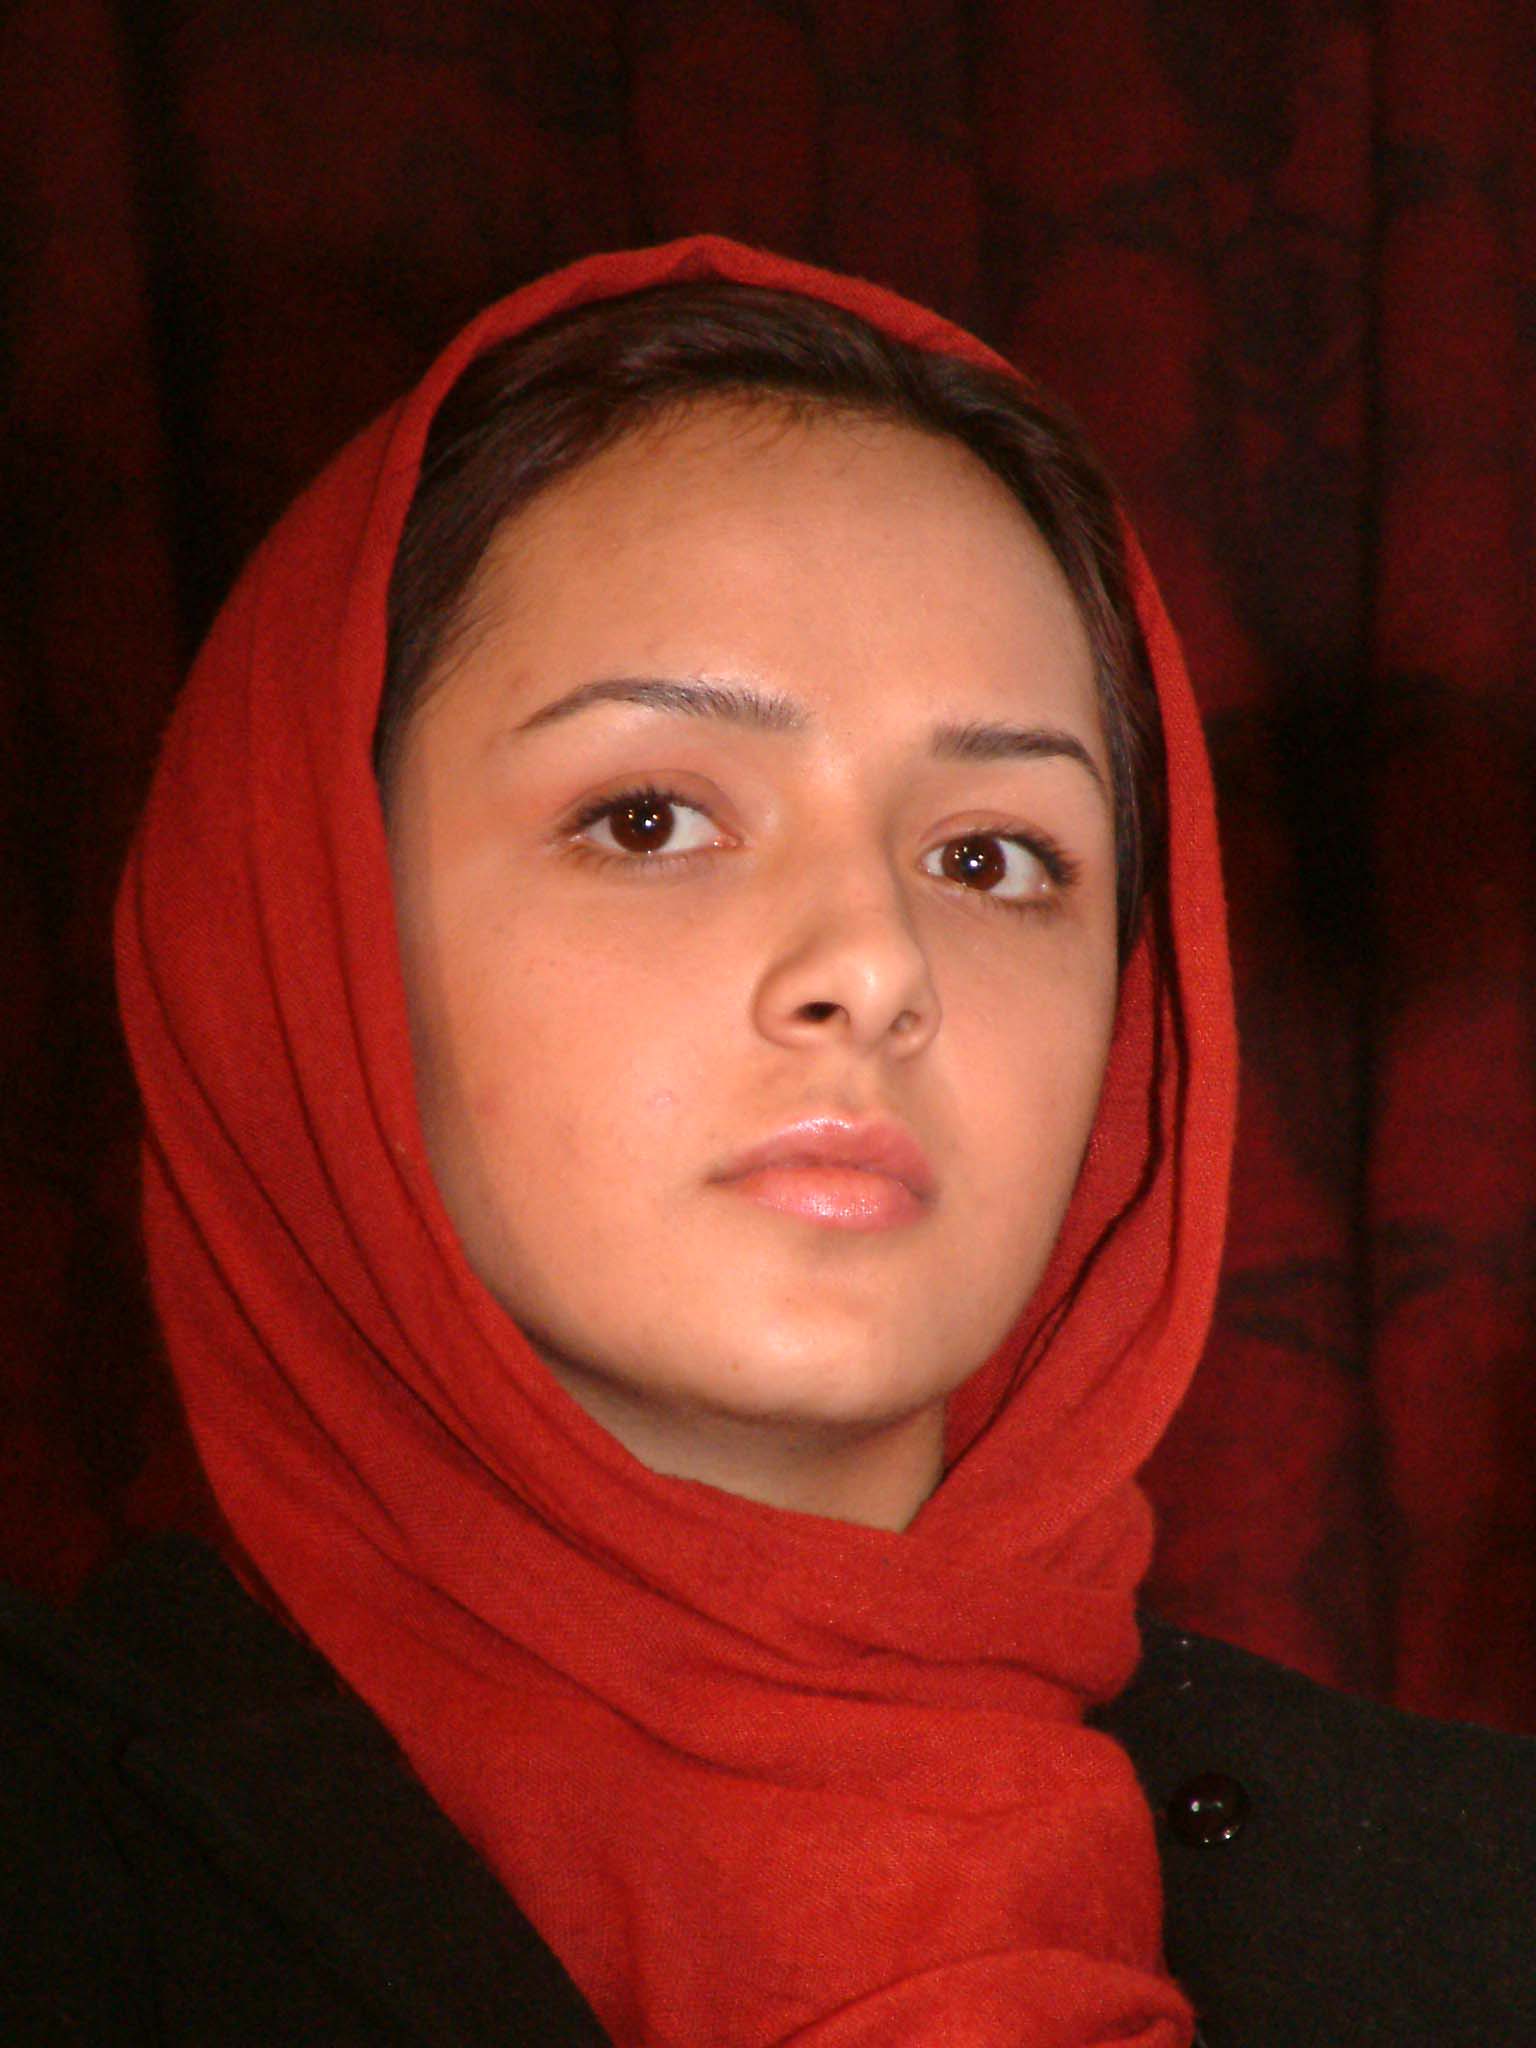 Index of /Persian Actress/04 Taraneh Alidoosti.